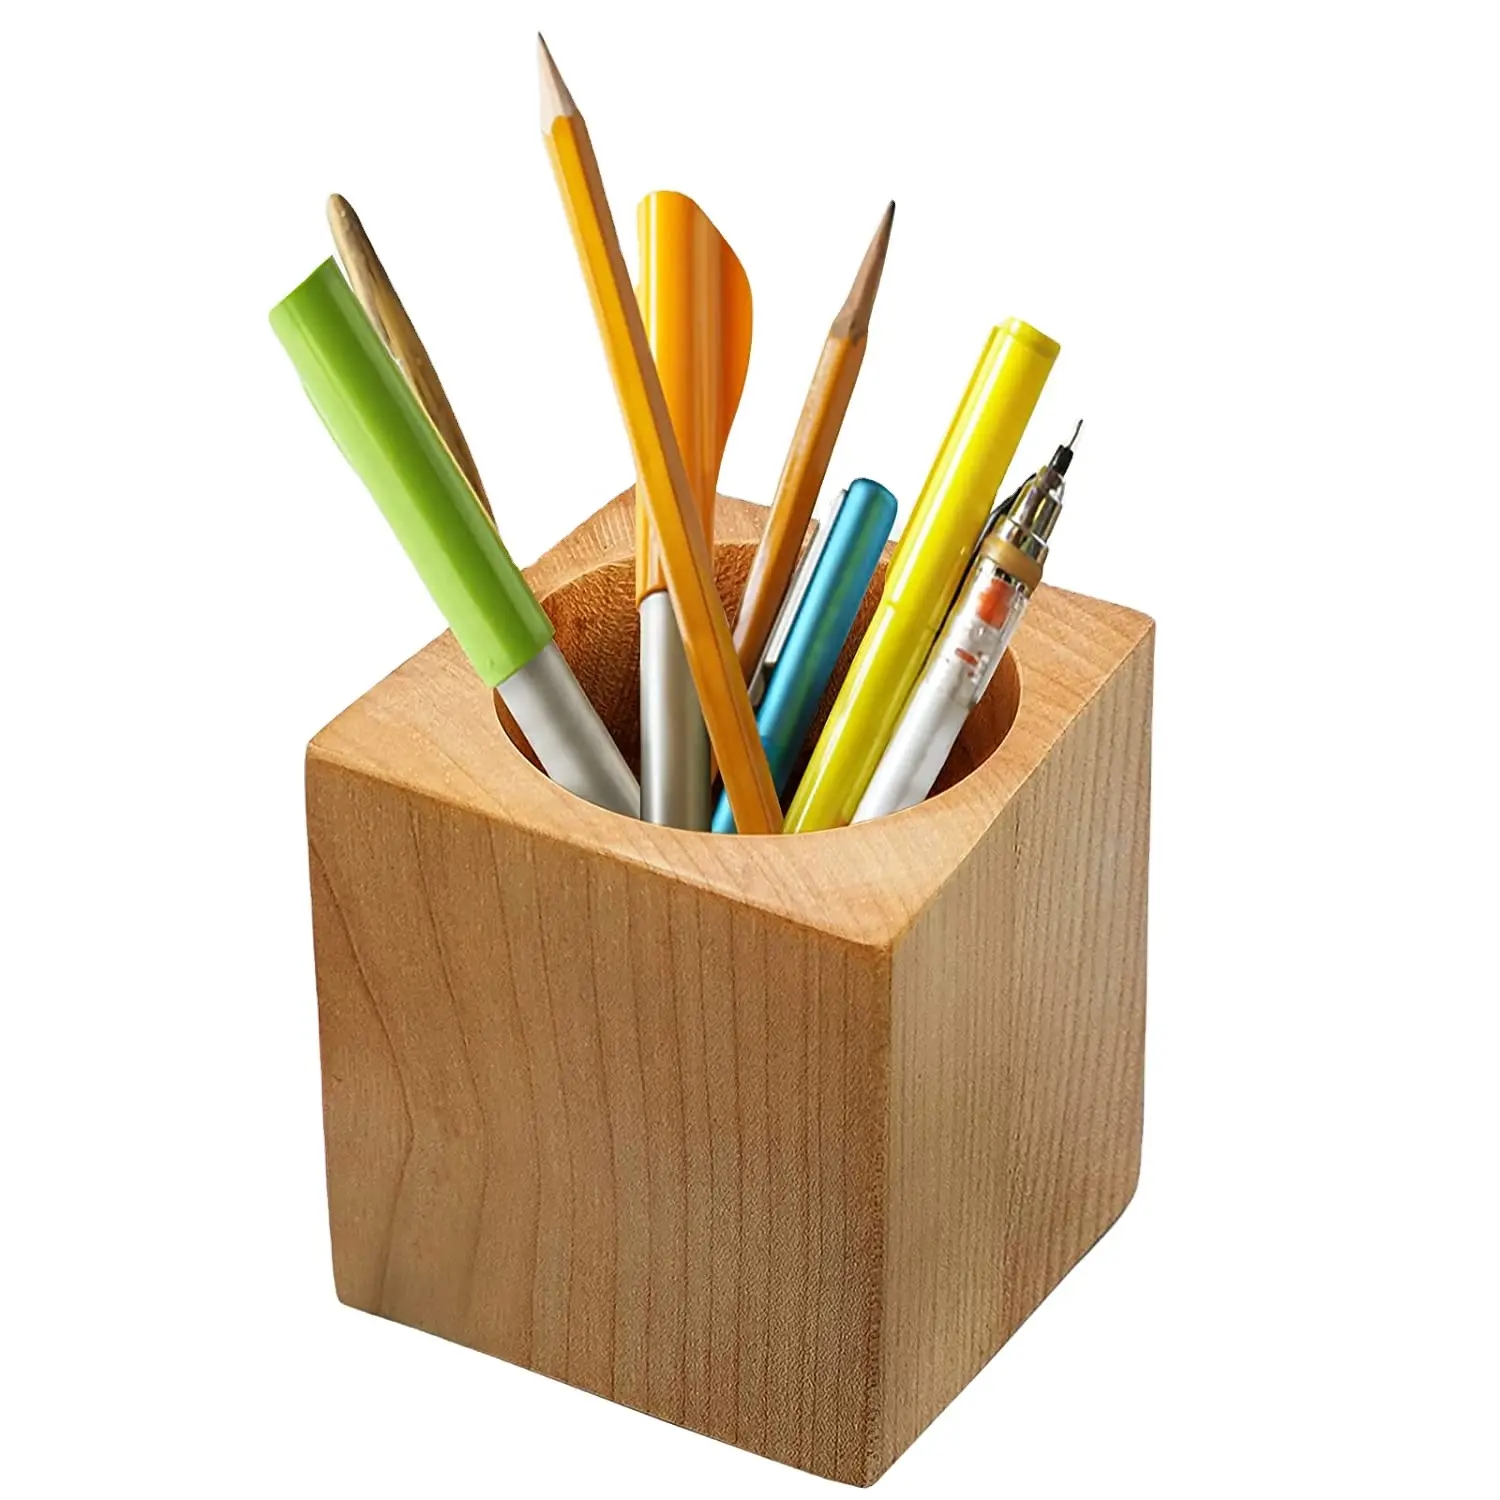 Hot selling bamboo and wood desktop pen holder multifunctional pencil cup basin desktop storage rack